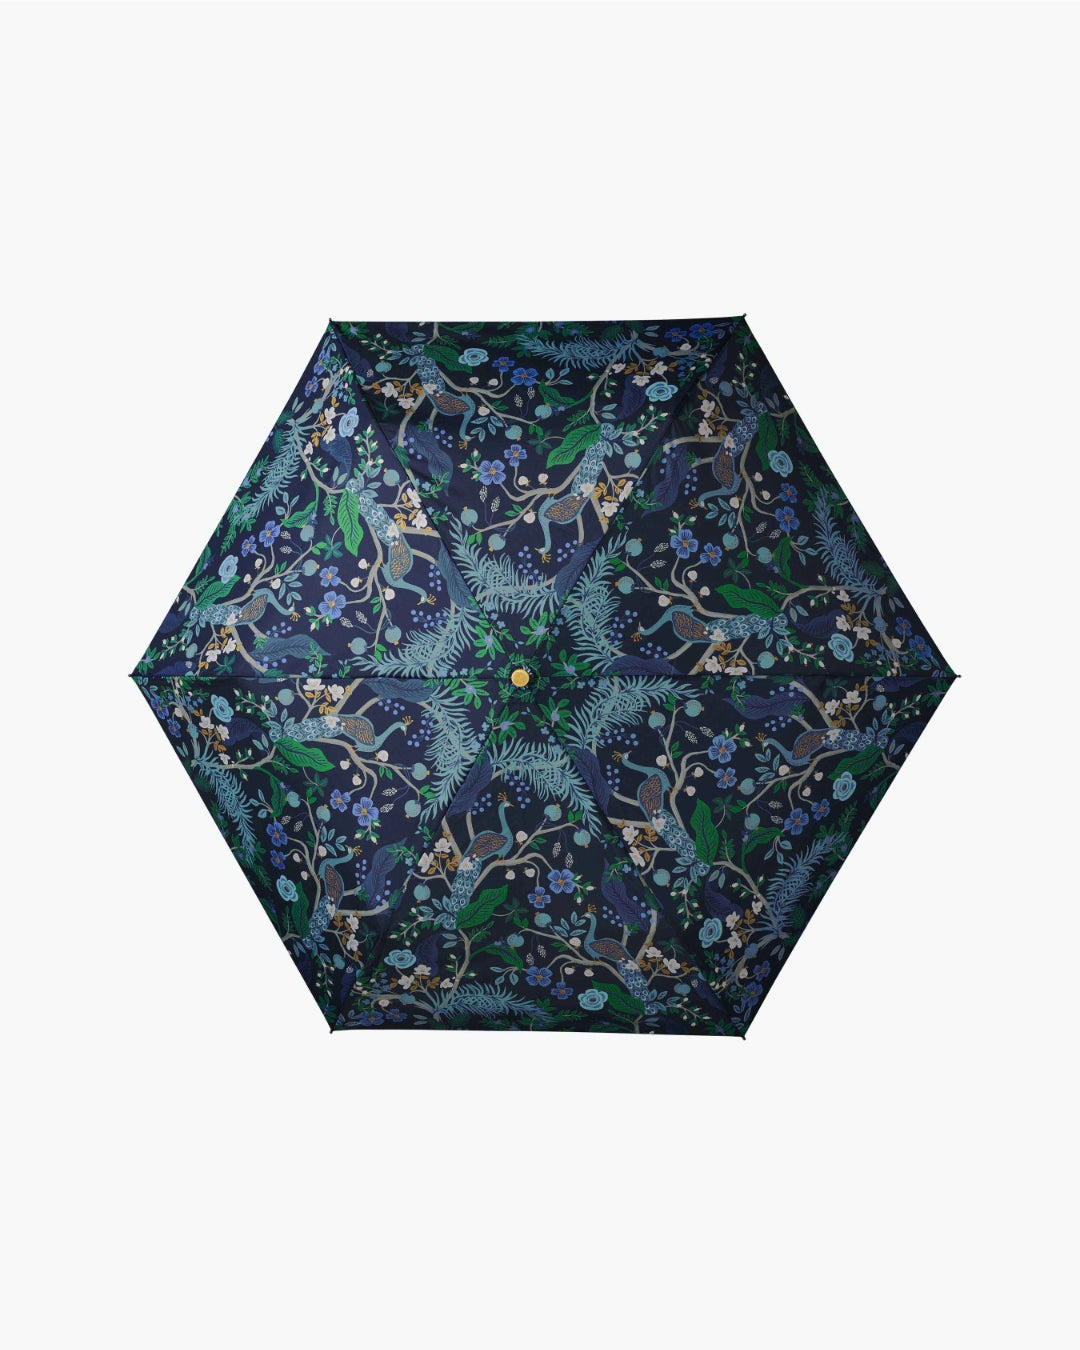 Umbrella - Peacock [PRE ORDER]